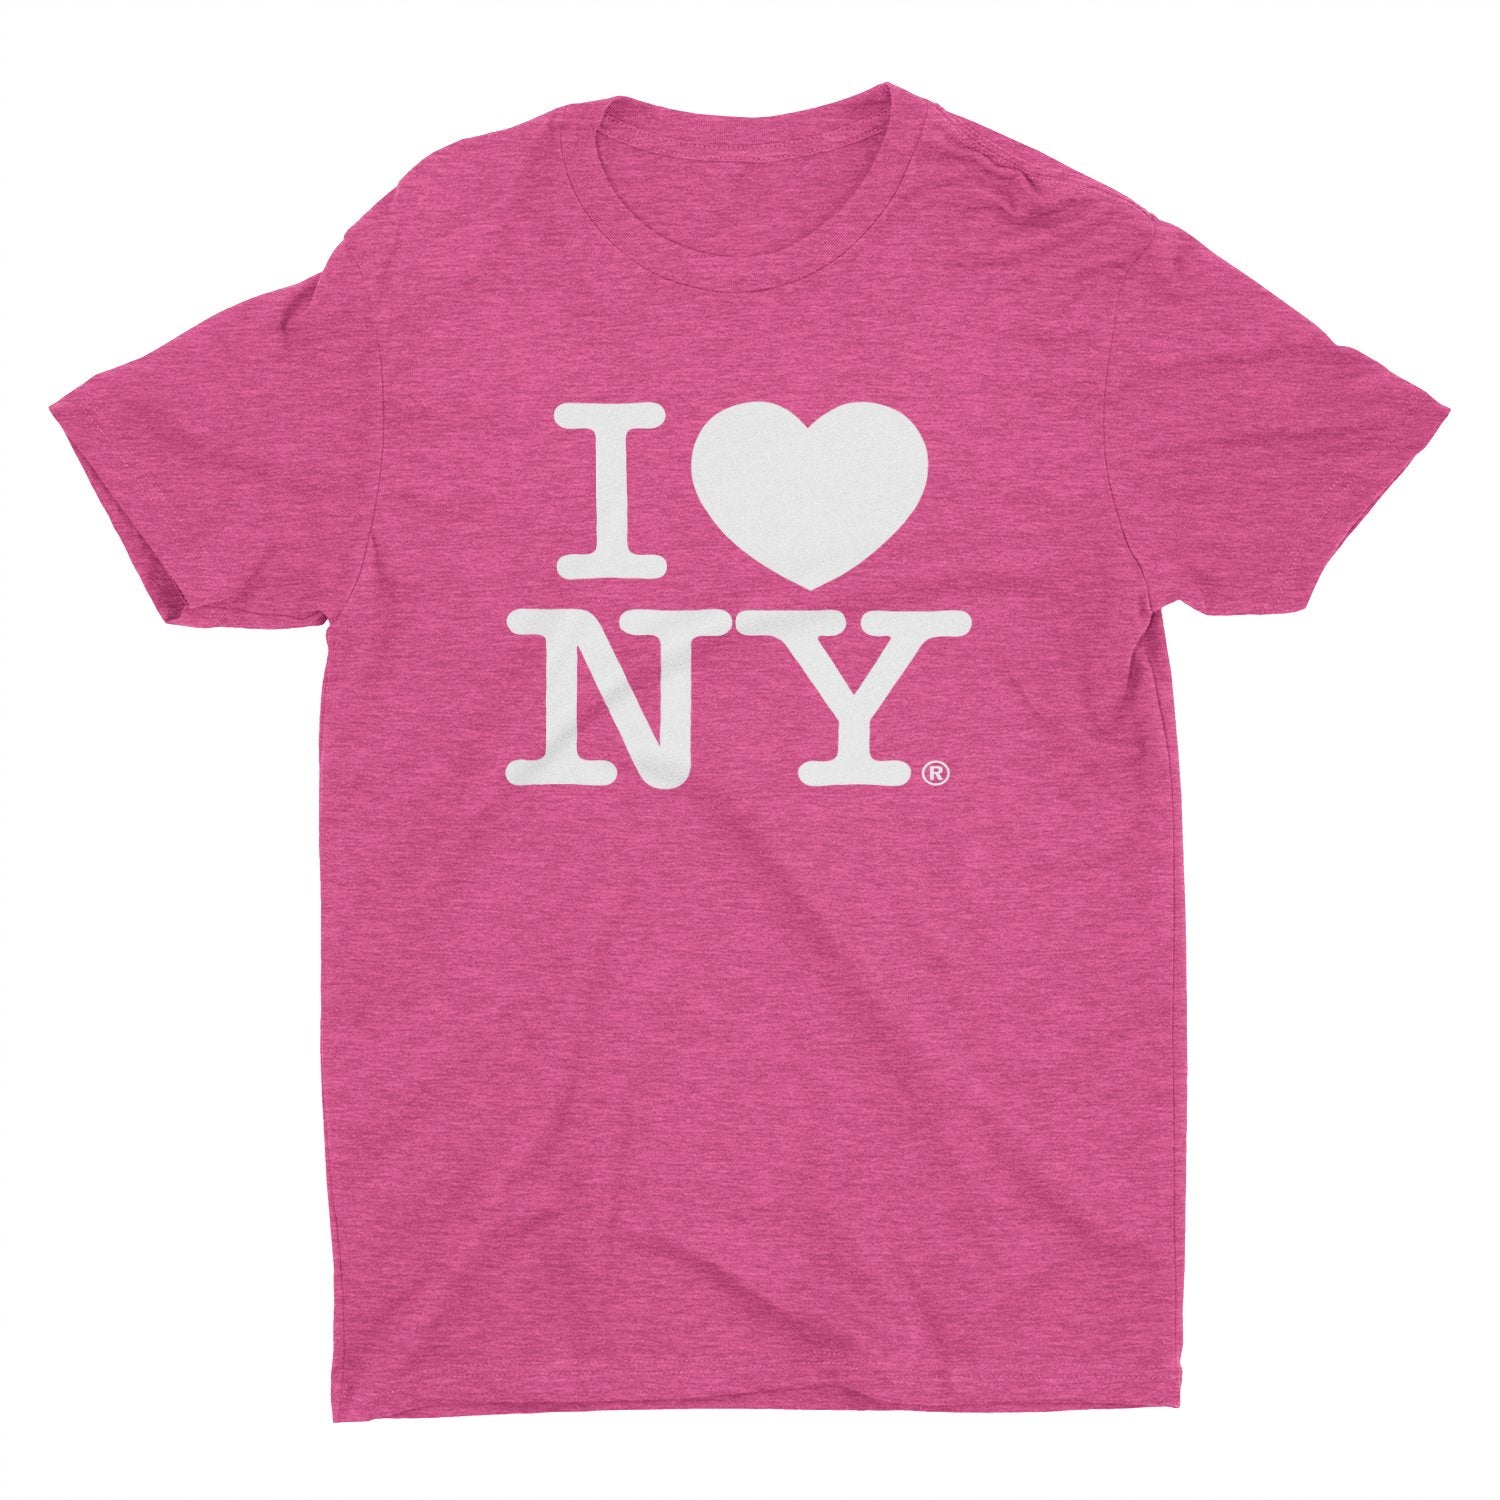 Ich liebe NY Kinder T-Shirt Heather Pink